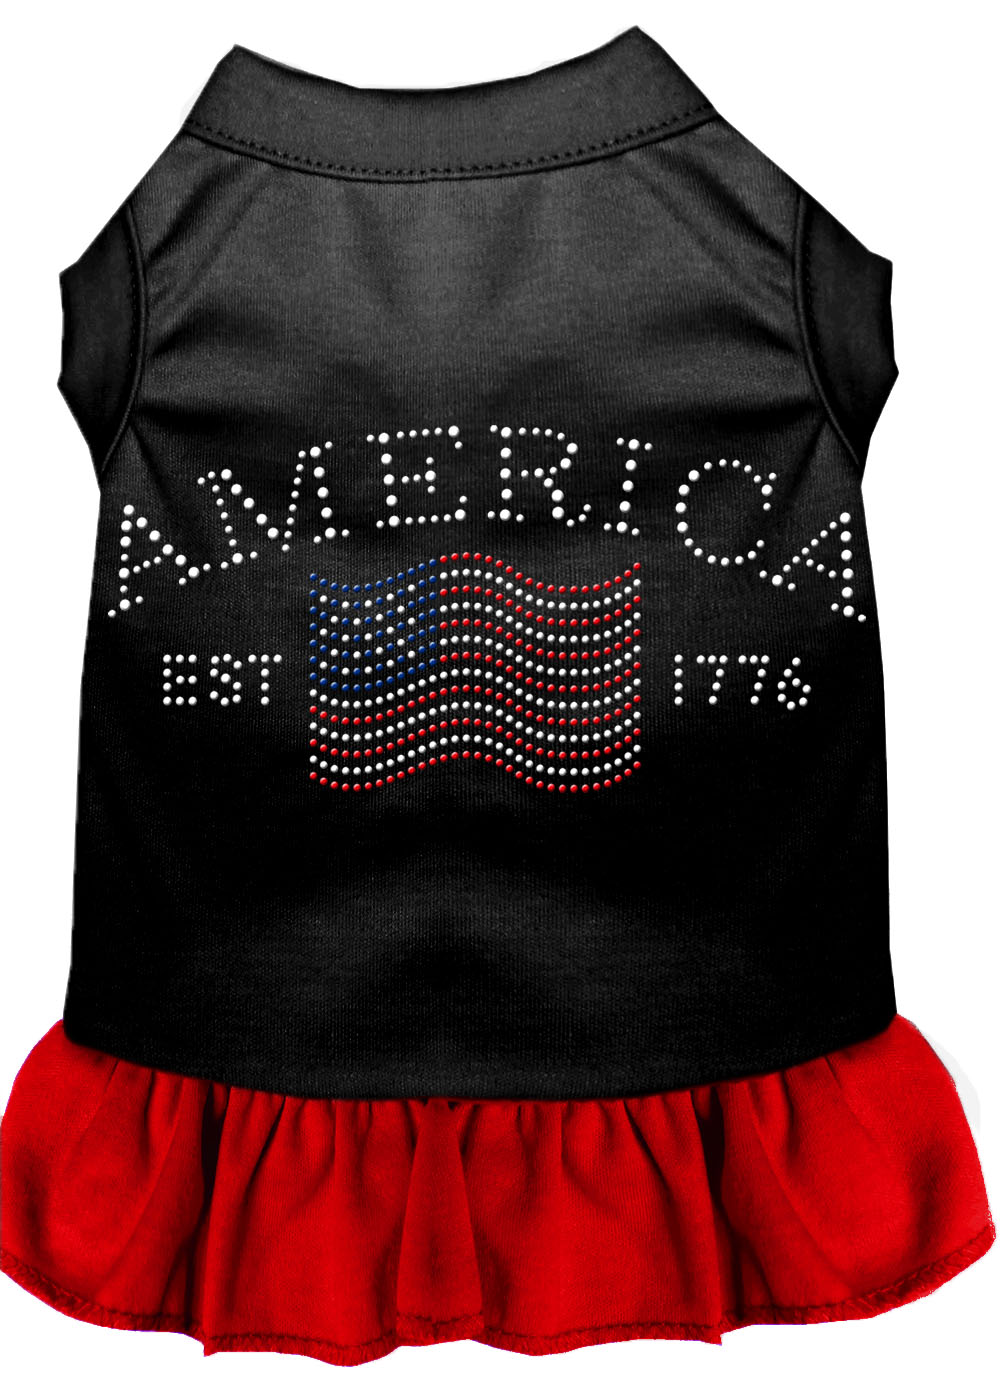 Classic America Rhinestone Dress Black with Red Sm